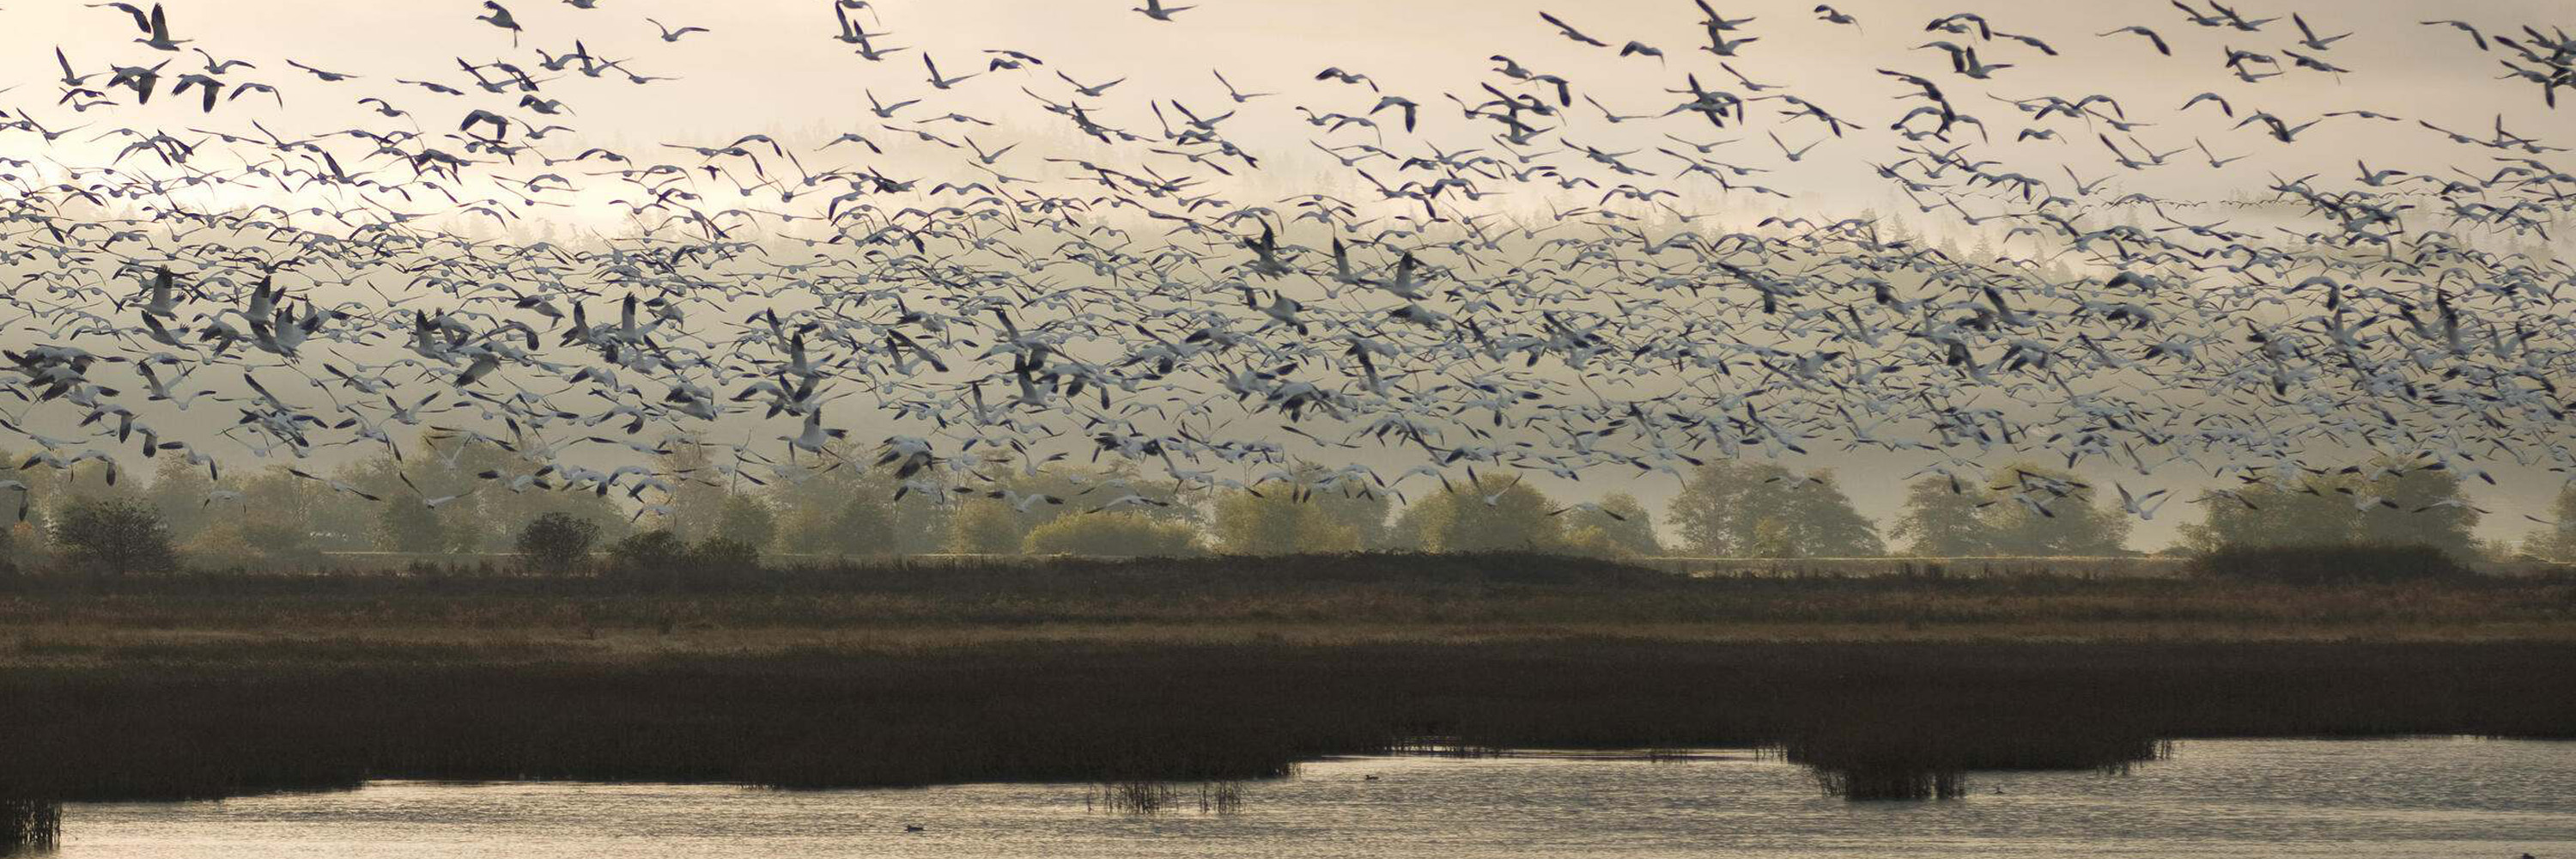 Birds take flight off the marshes of TNC's 4,122-acre Port Susan Bay Preserve in Washington. © Bridget Besaw 